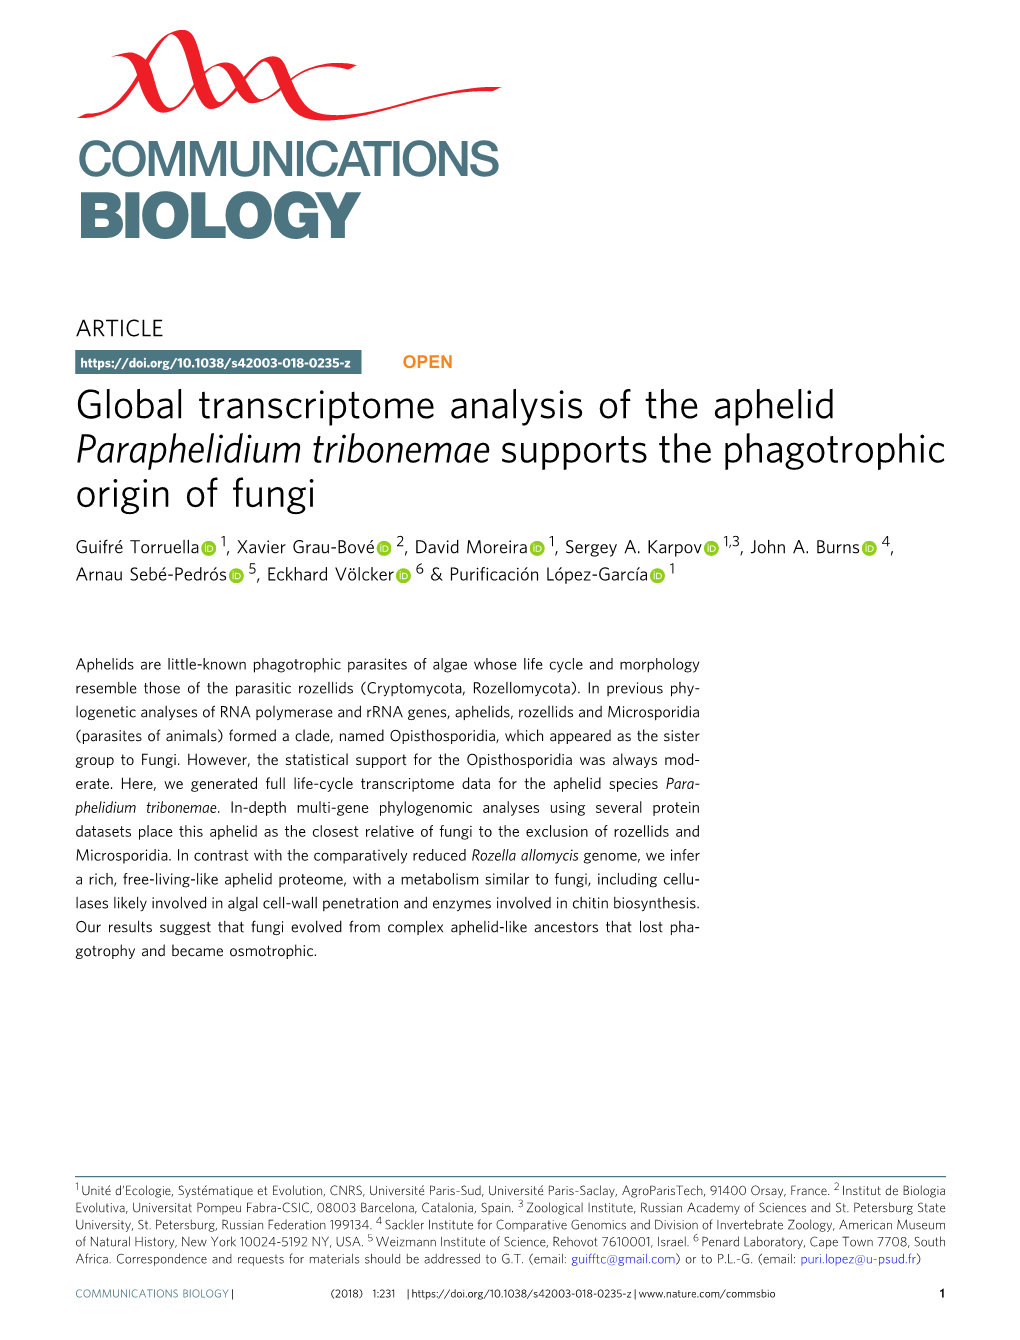 Global Transcriptome Analysis of the Aphelid Paraphelidium Tribonemae Supports the Phagotrophic Origin of Fungi